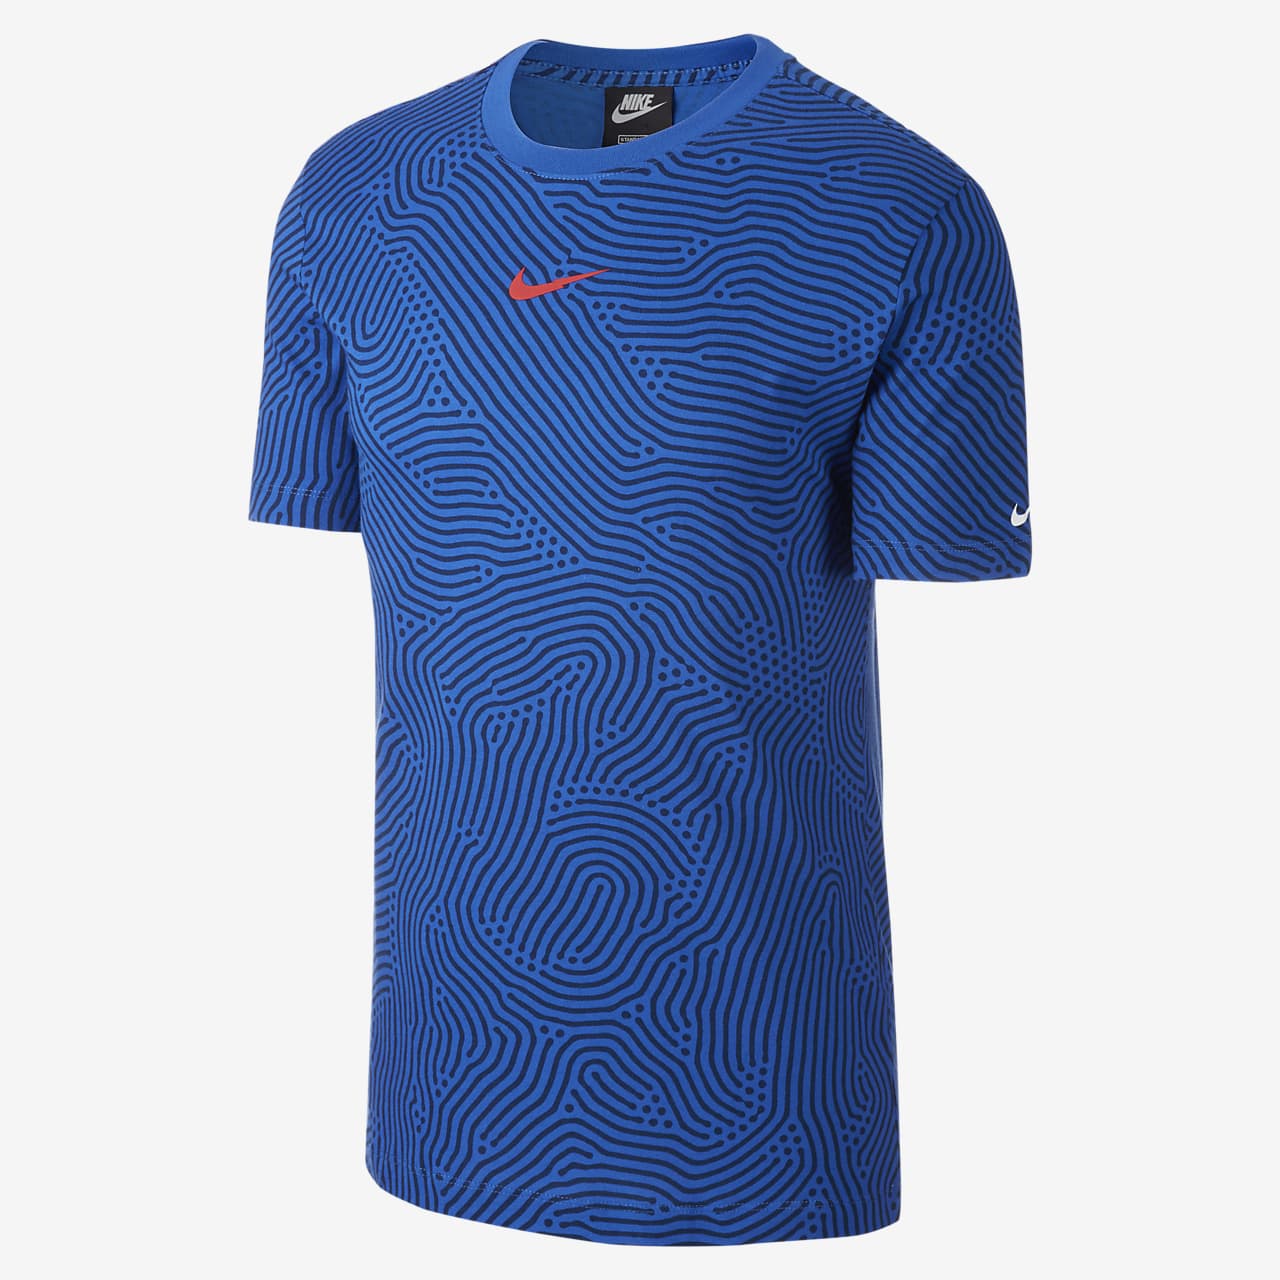 Nike Sportswear Men's Printed T-Shirt